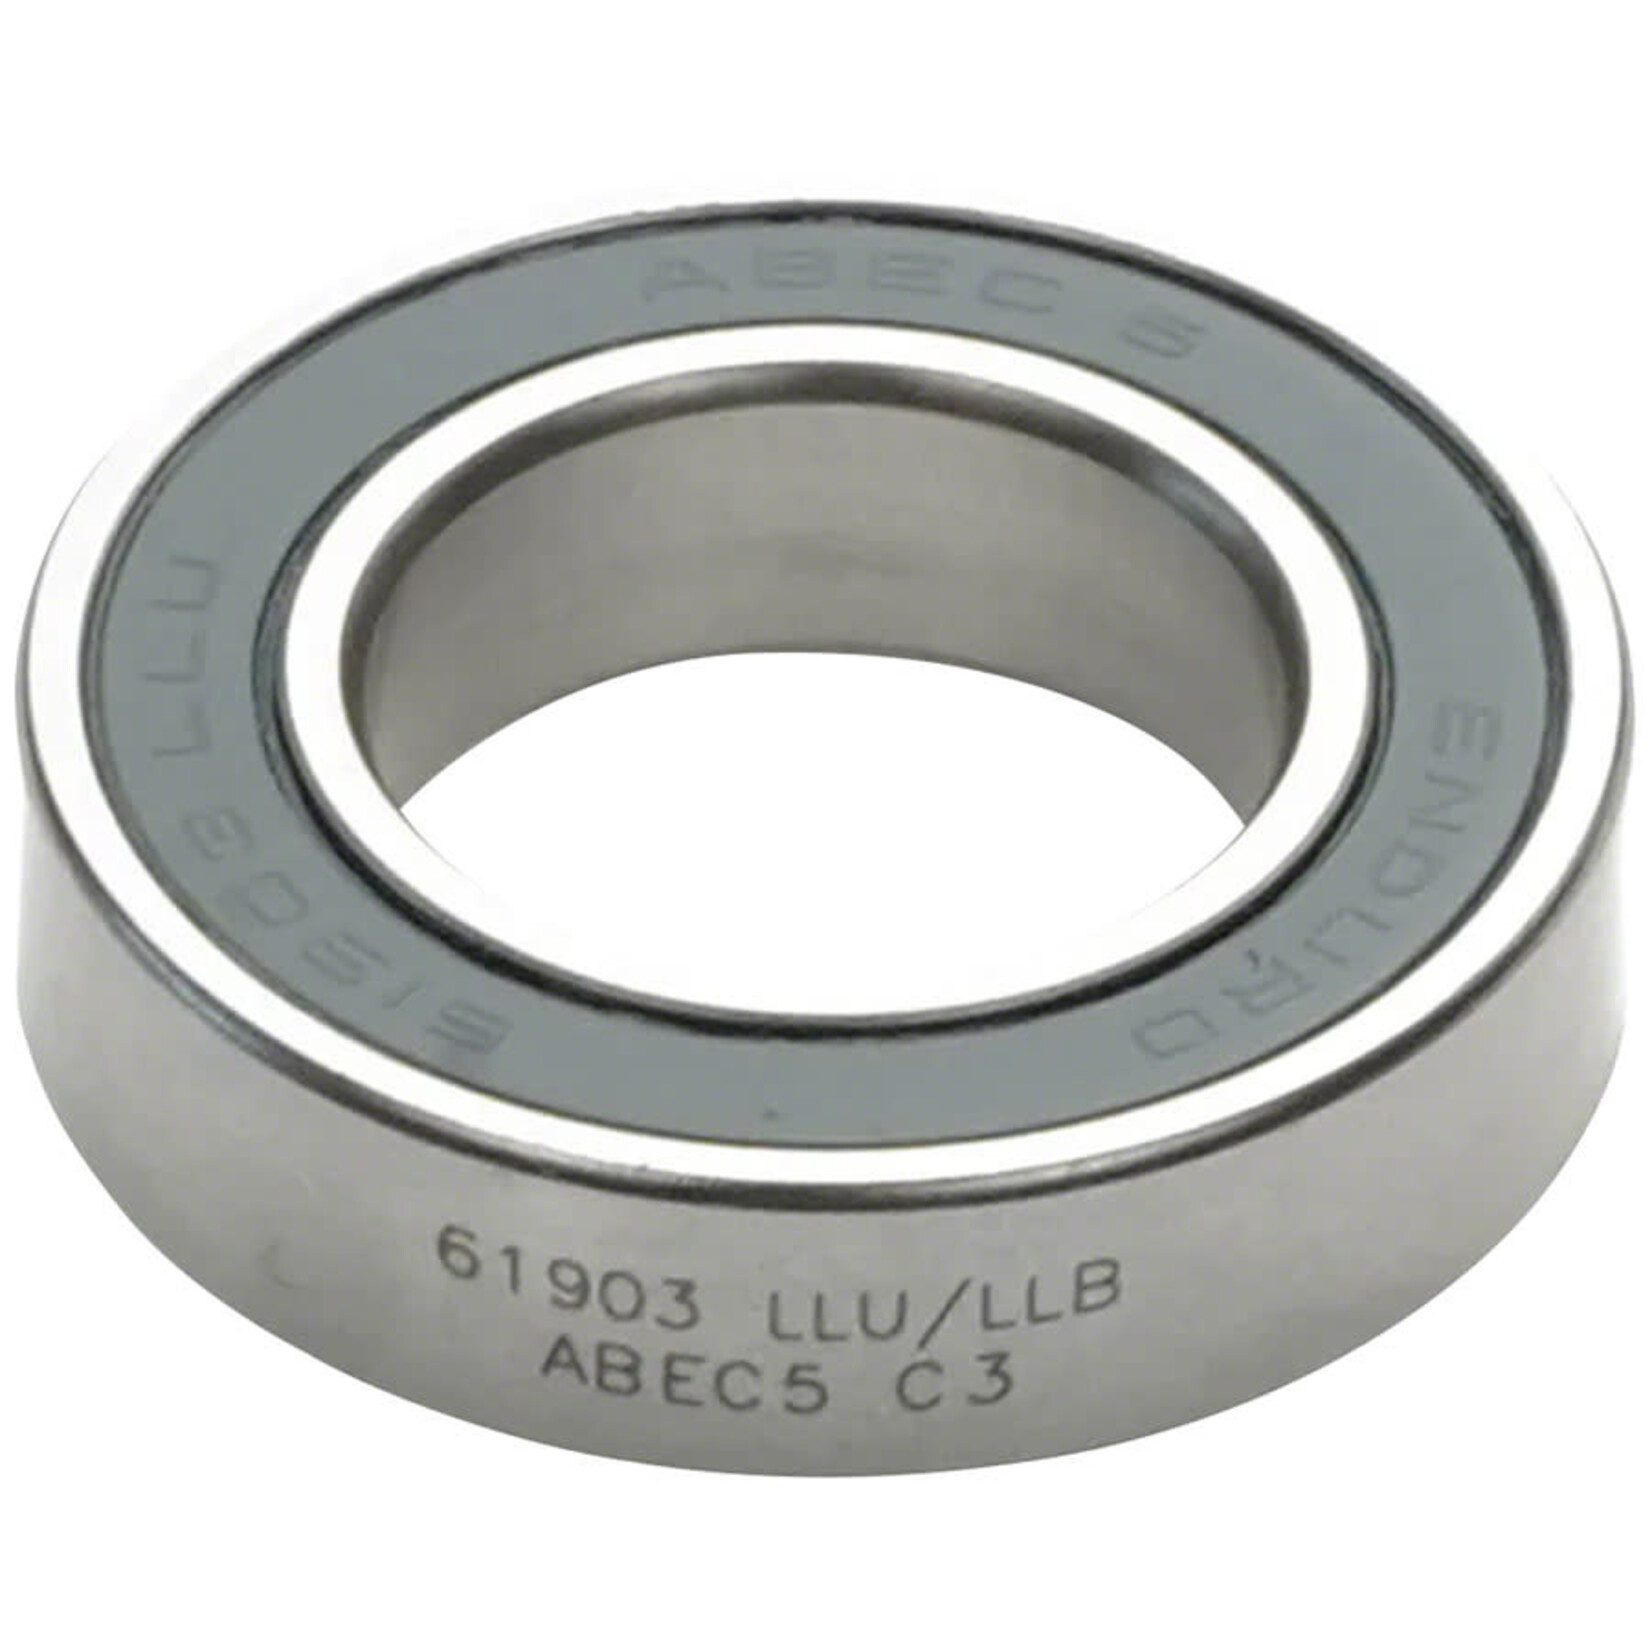 Enduro 61903 LLU/LLB Radial Bearing - ABEC-5, CN Clearance, 17mm x 30mm x 7mm